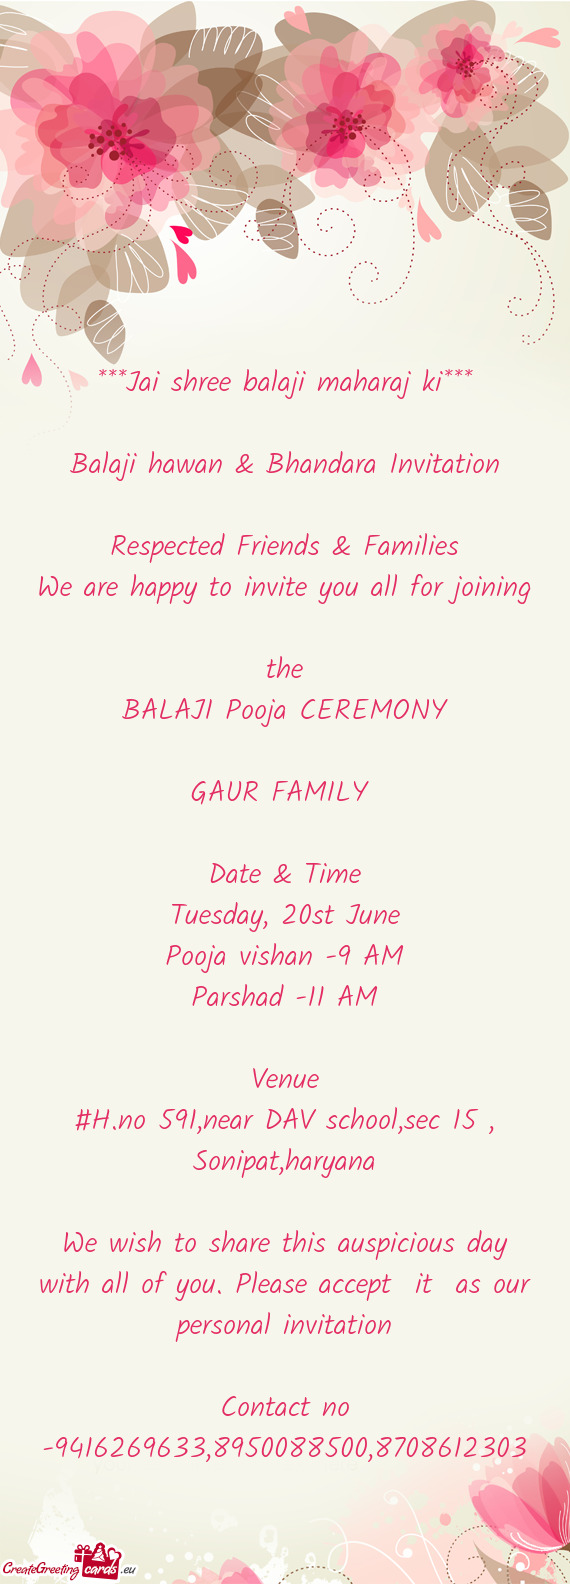 Balaji hawan & Bhandara Invitation